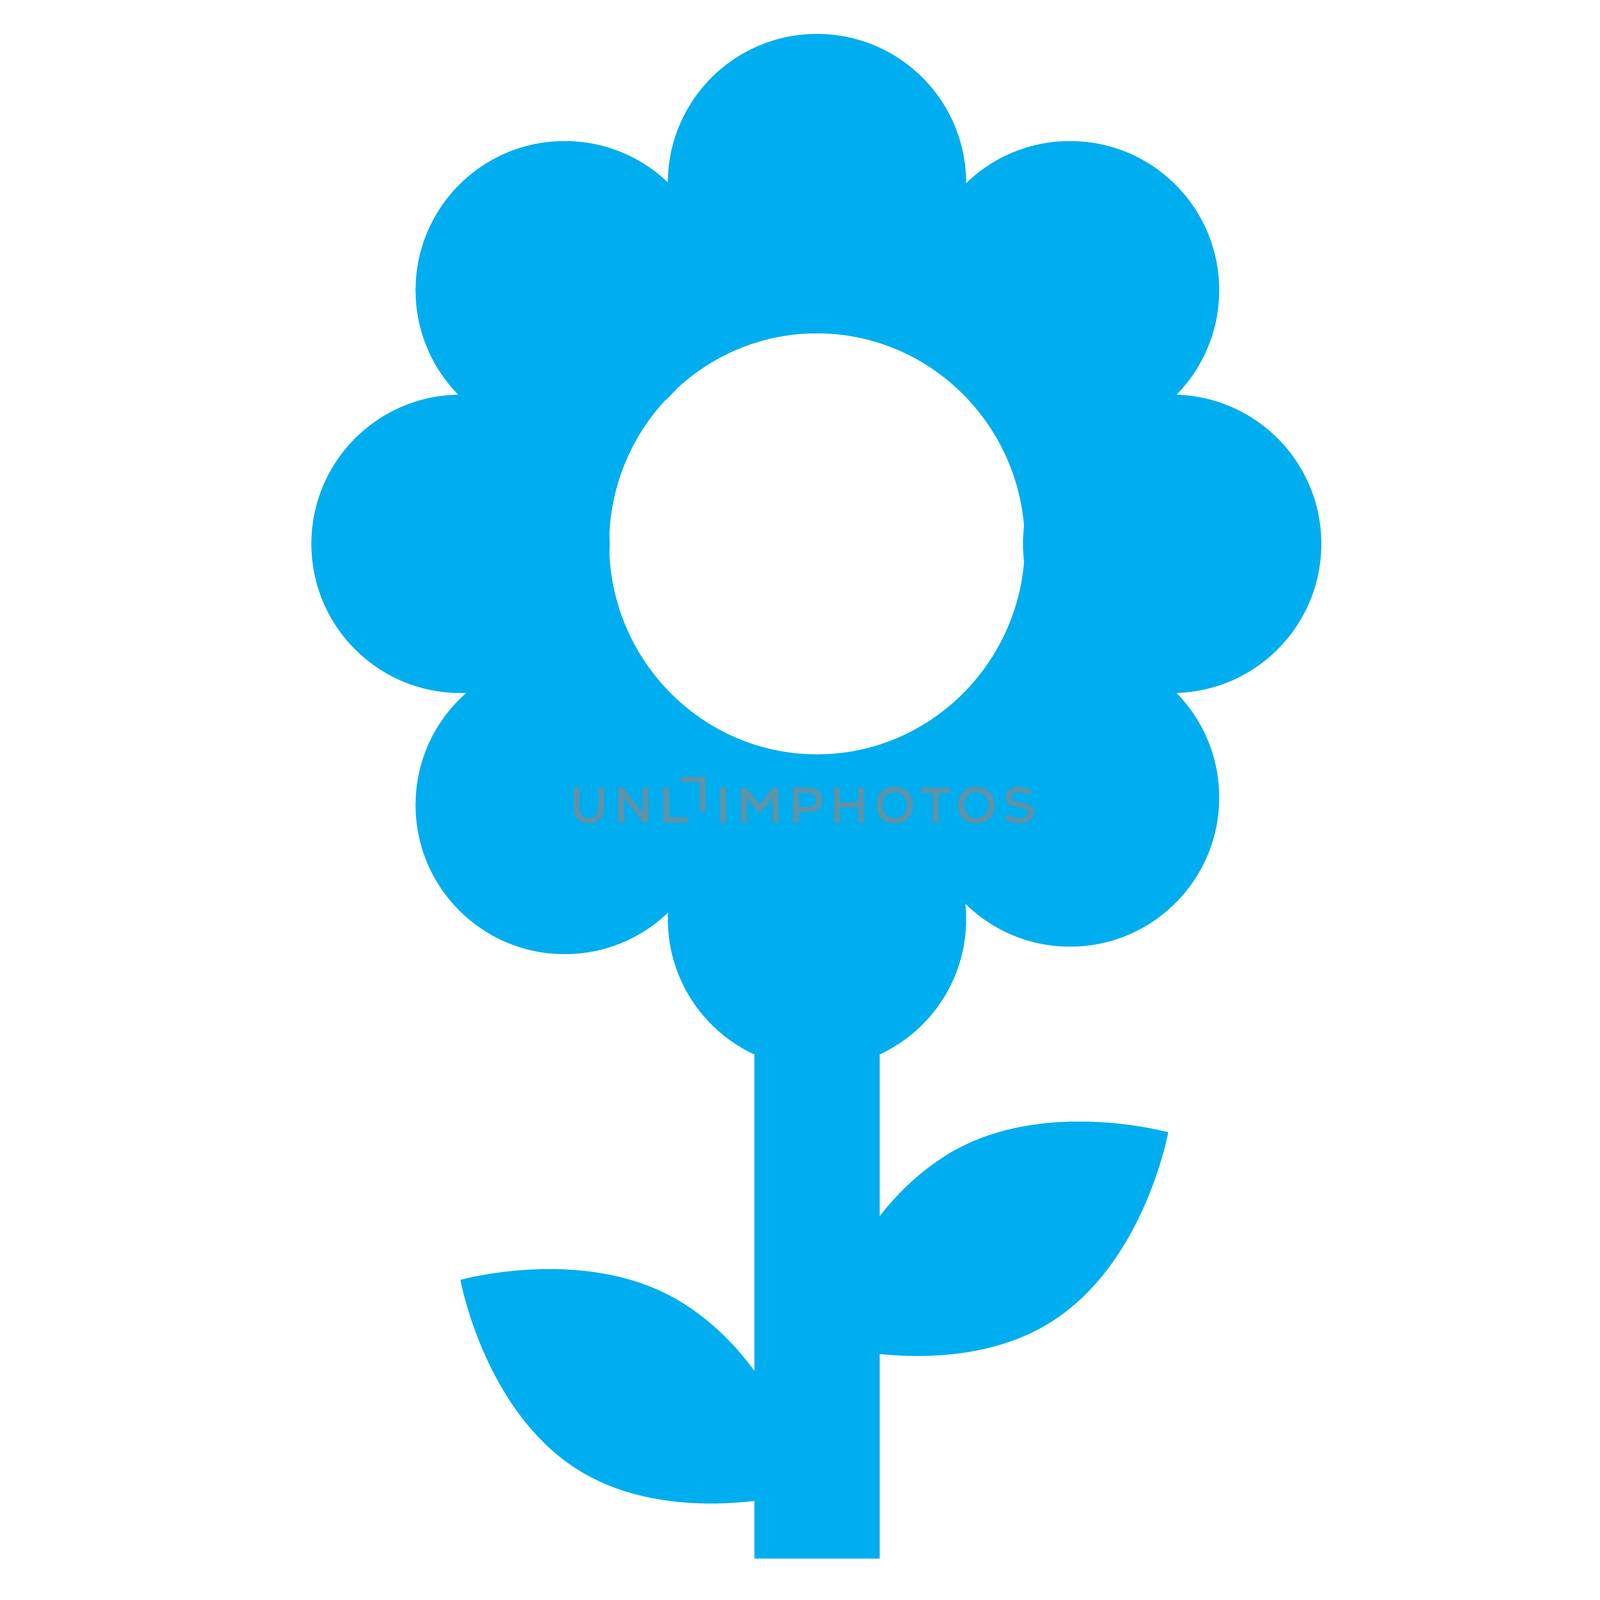 flower icon on white background. flat style. flower sign for your web site design, logo, app, UI. blue flower symbol.